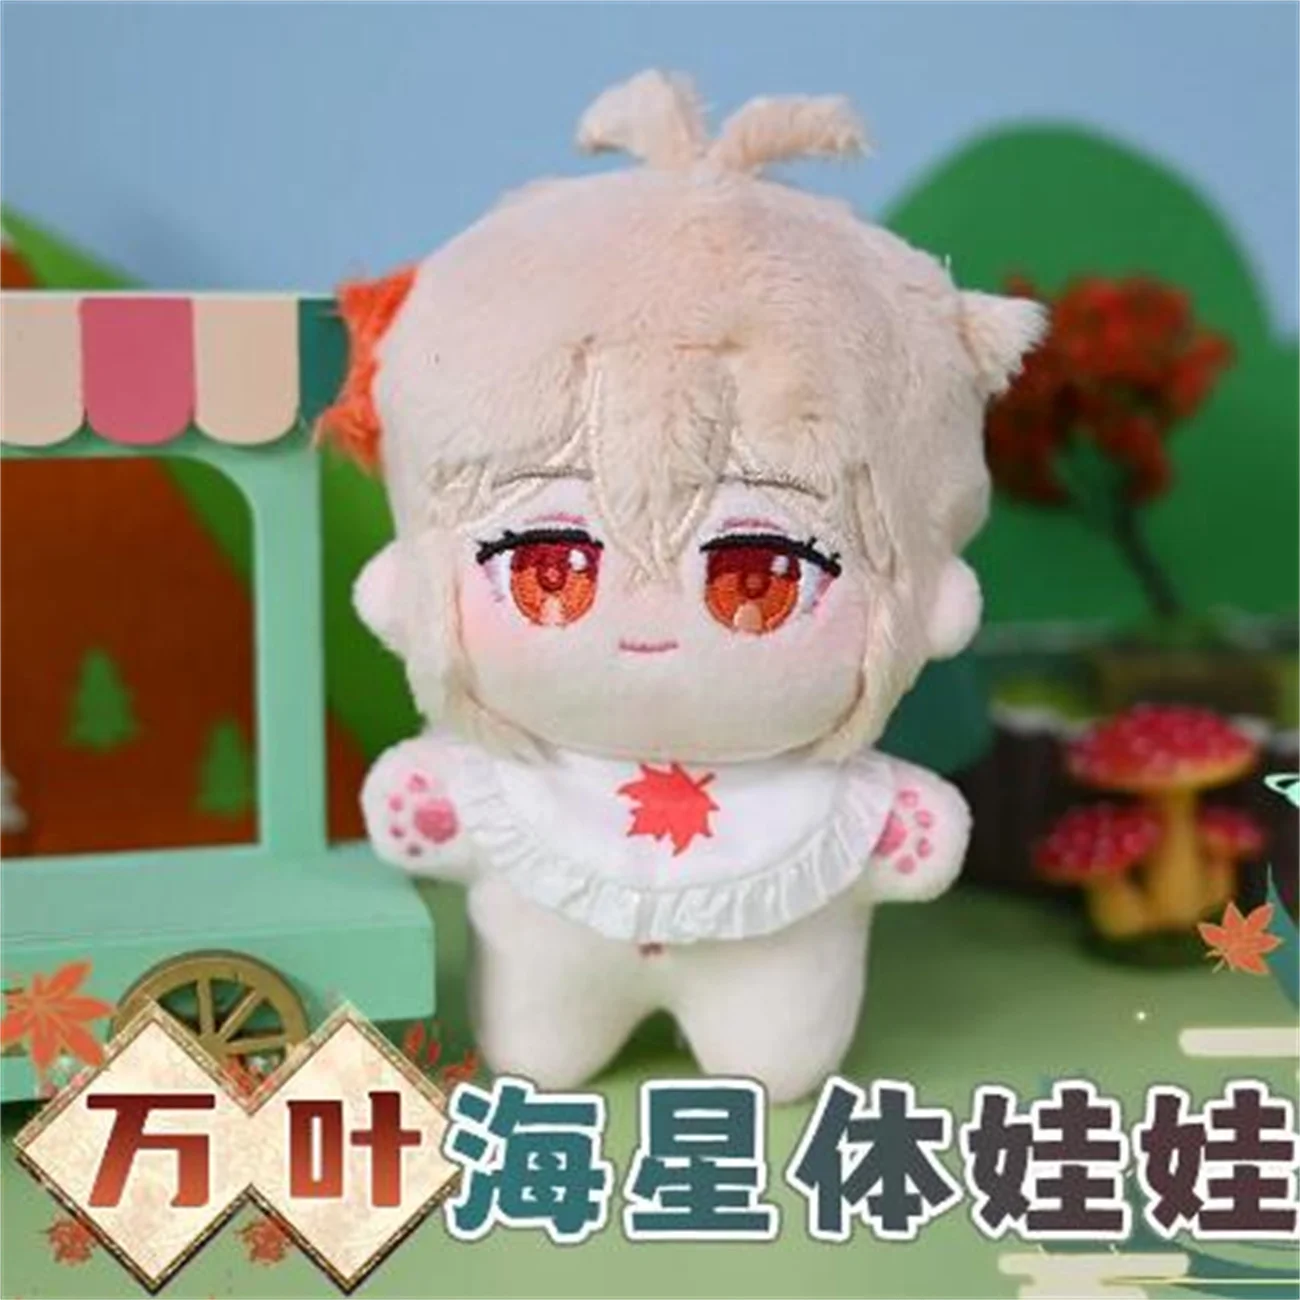 

Game Anime Genshin Impact Kaedehara Kazuha Cosplay Cute Mini 10cm Starfish Plush Cotton Doll Body Toy Plushie Xmas Gifts